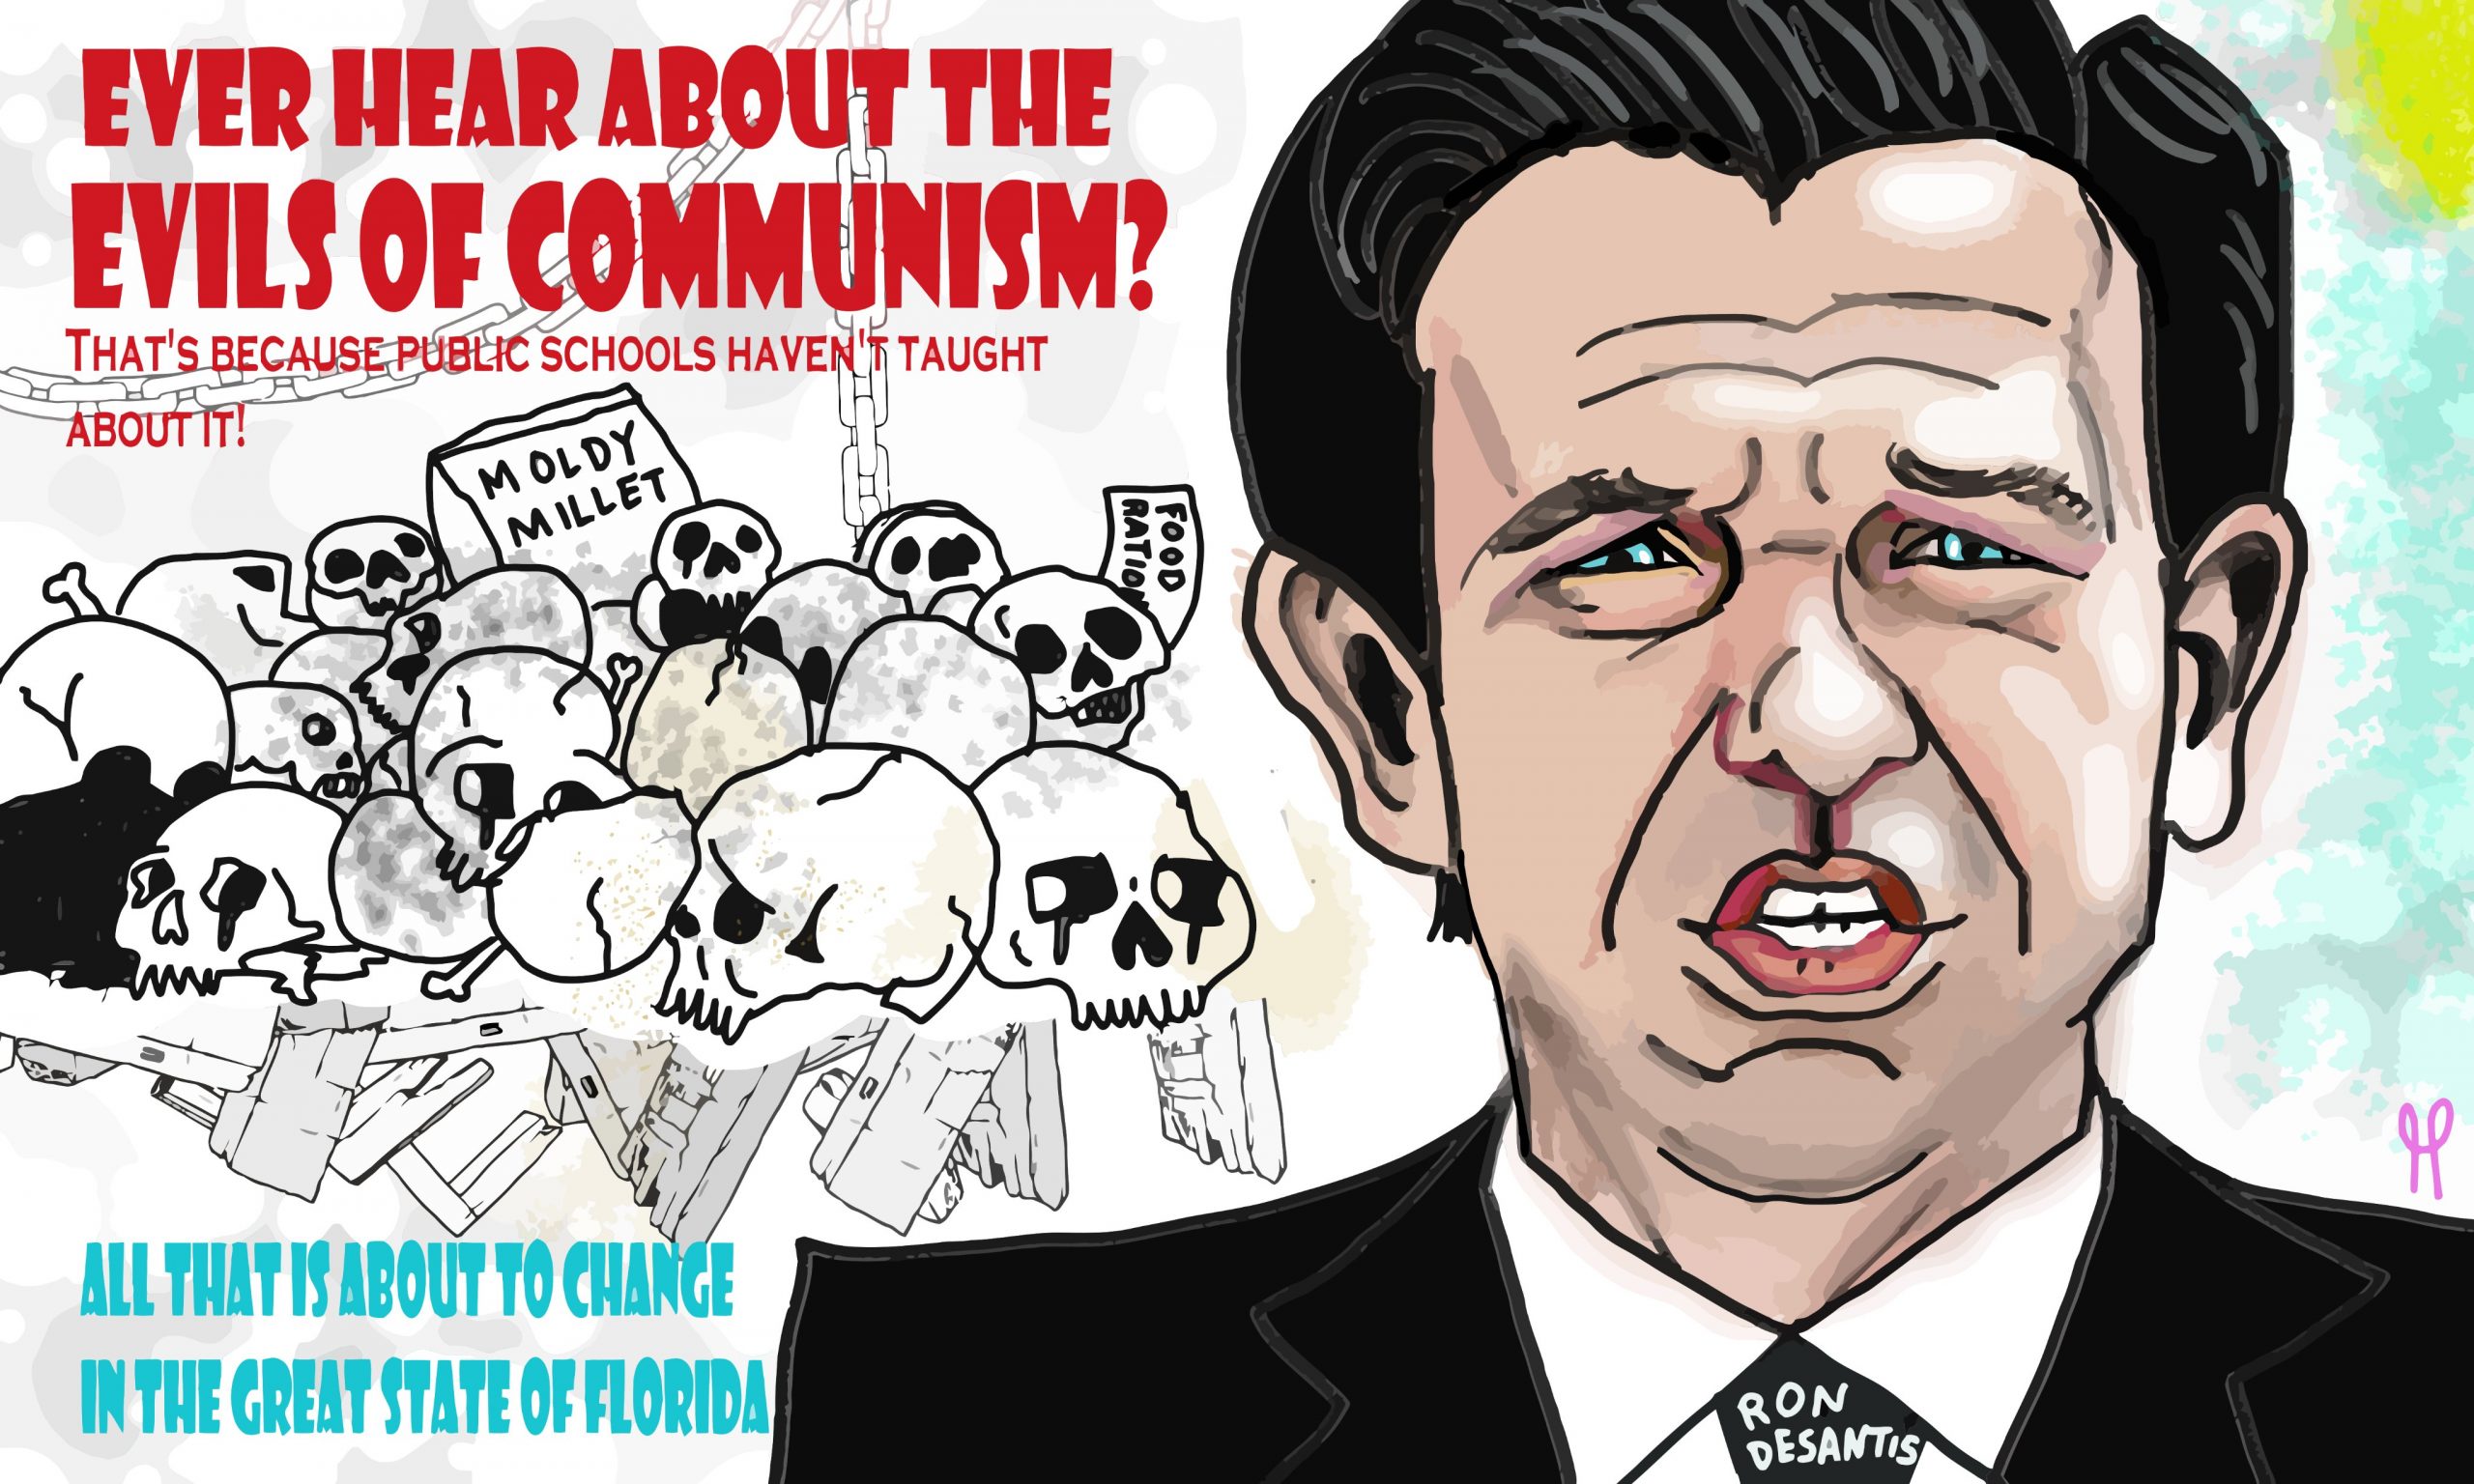 Governor Ron DeSantis evils of communism political editorial cartoon post thumbnail image